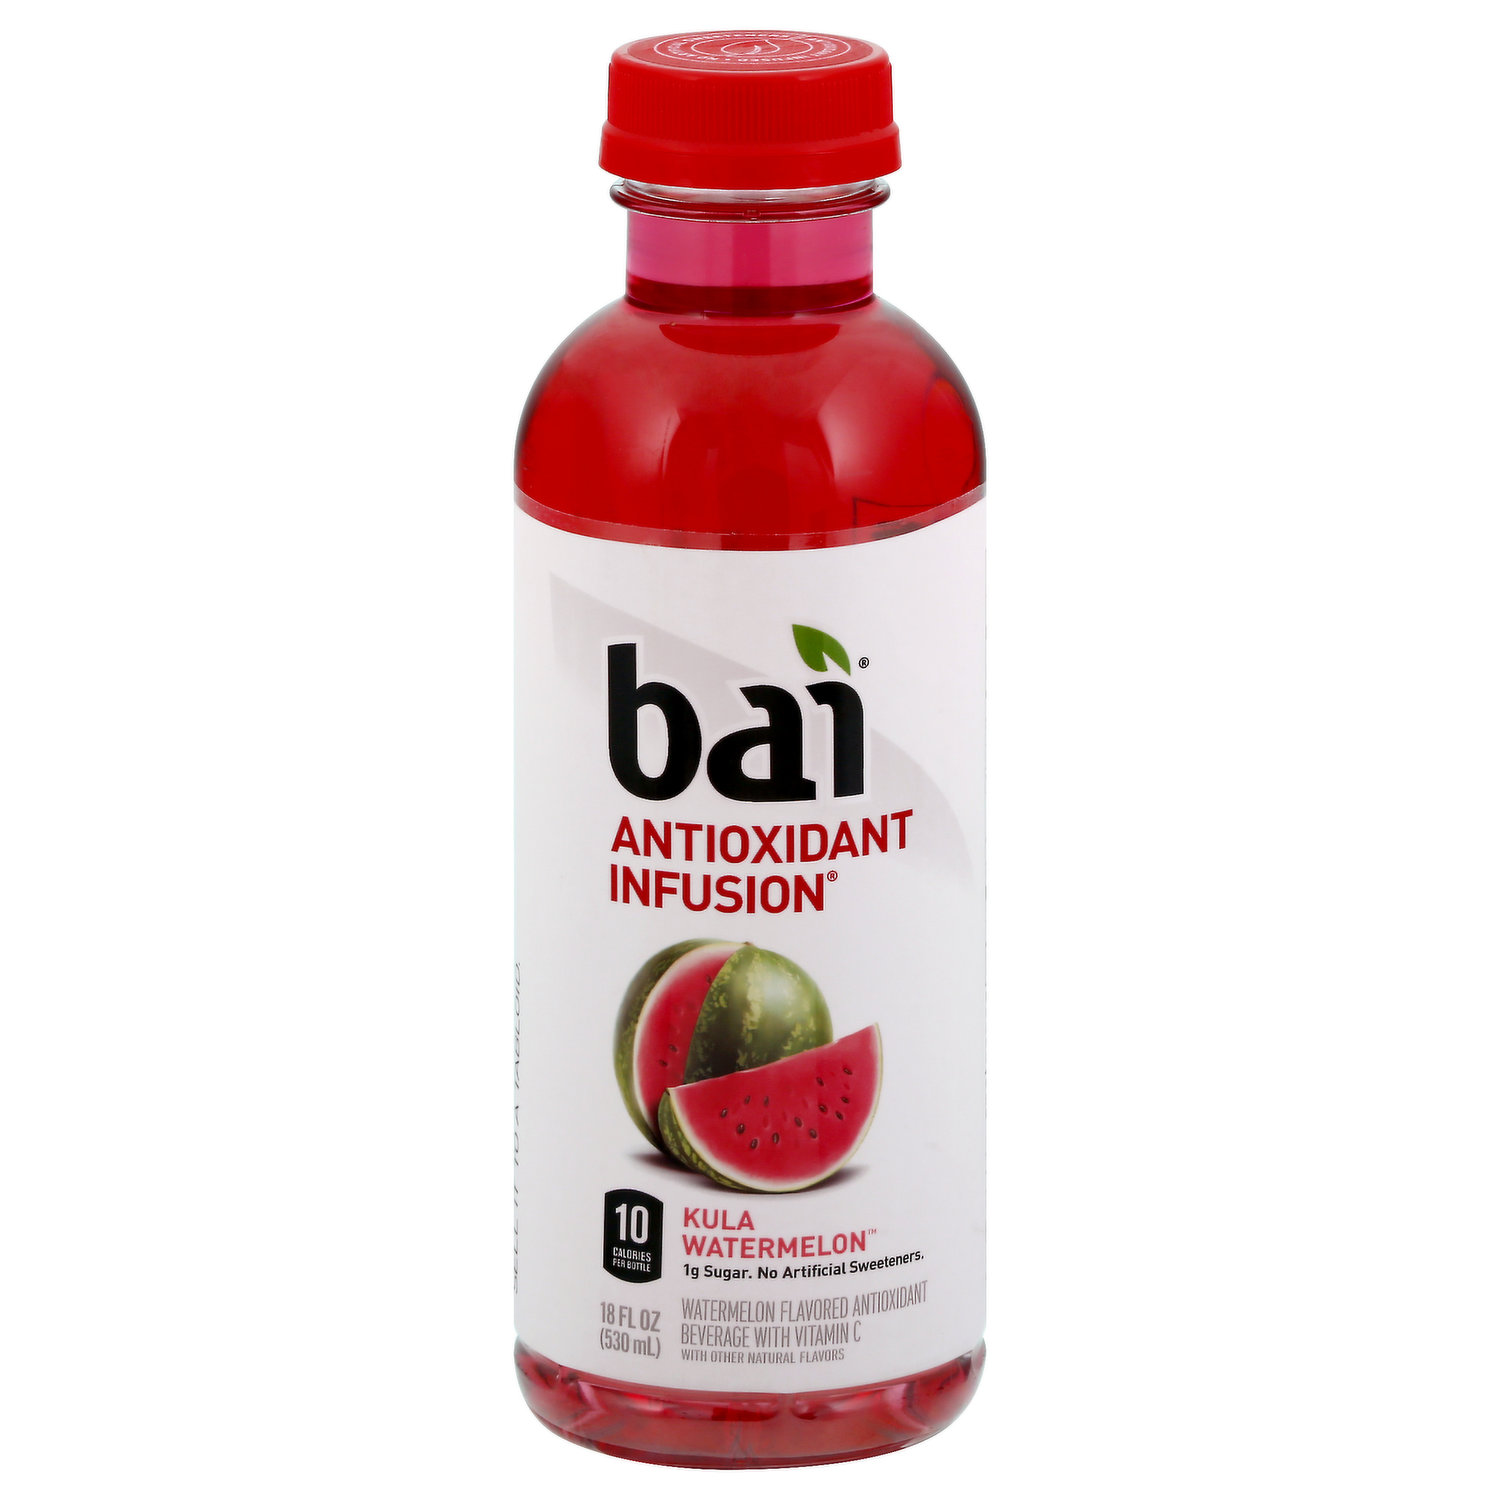 Bai Coffeefruit Drink Business Story